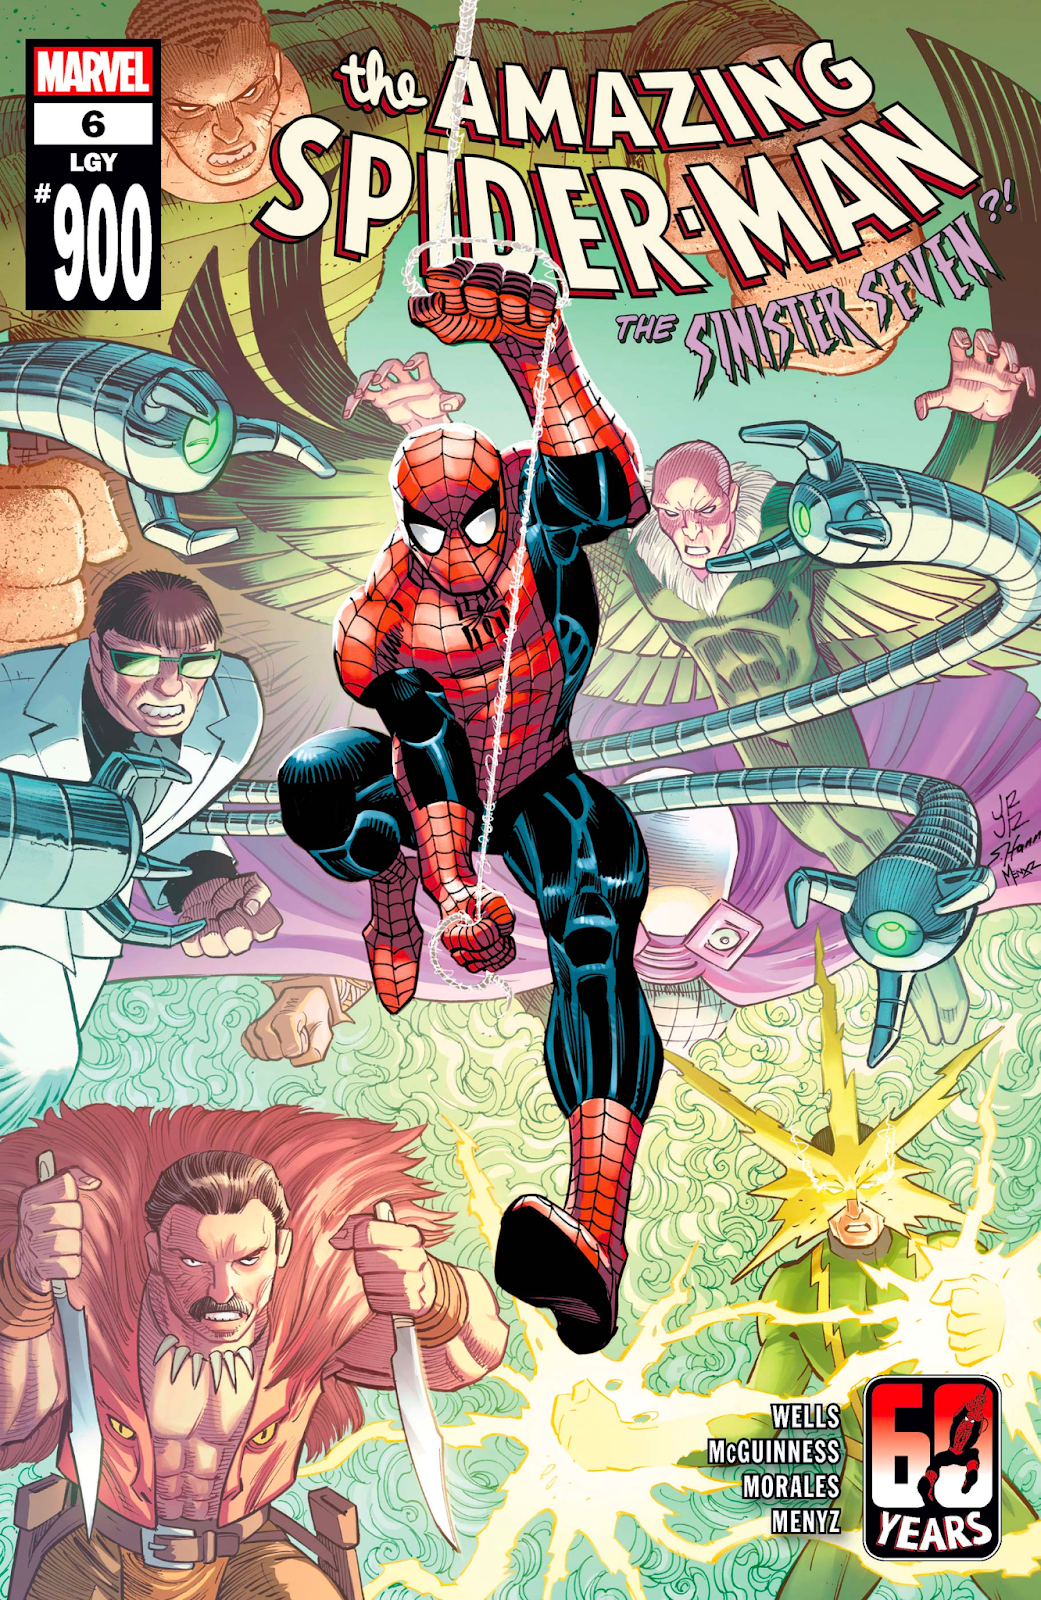 Amazing Spider-Man #6 #900 Marvel Comics